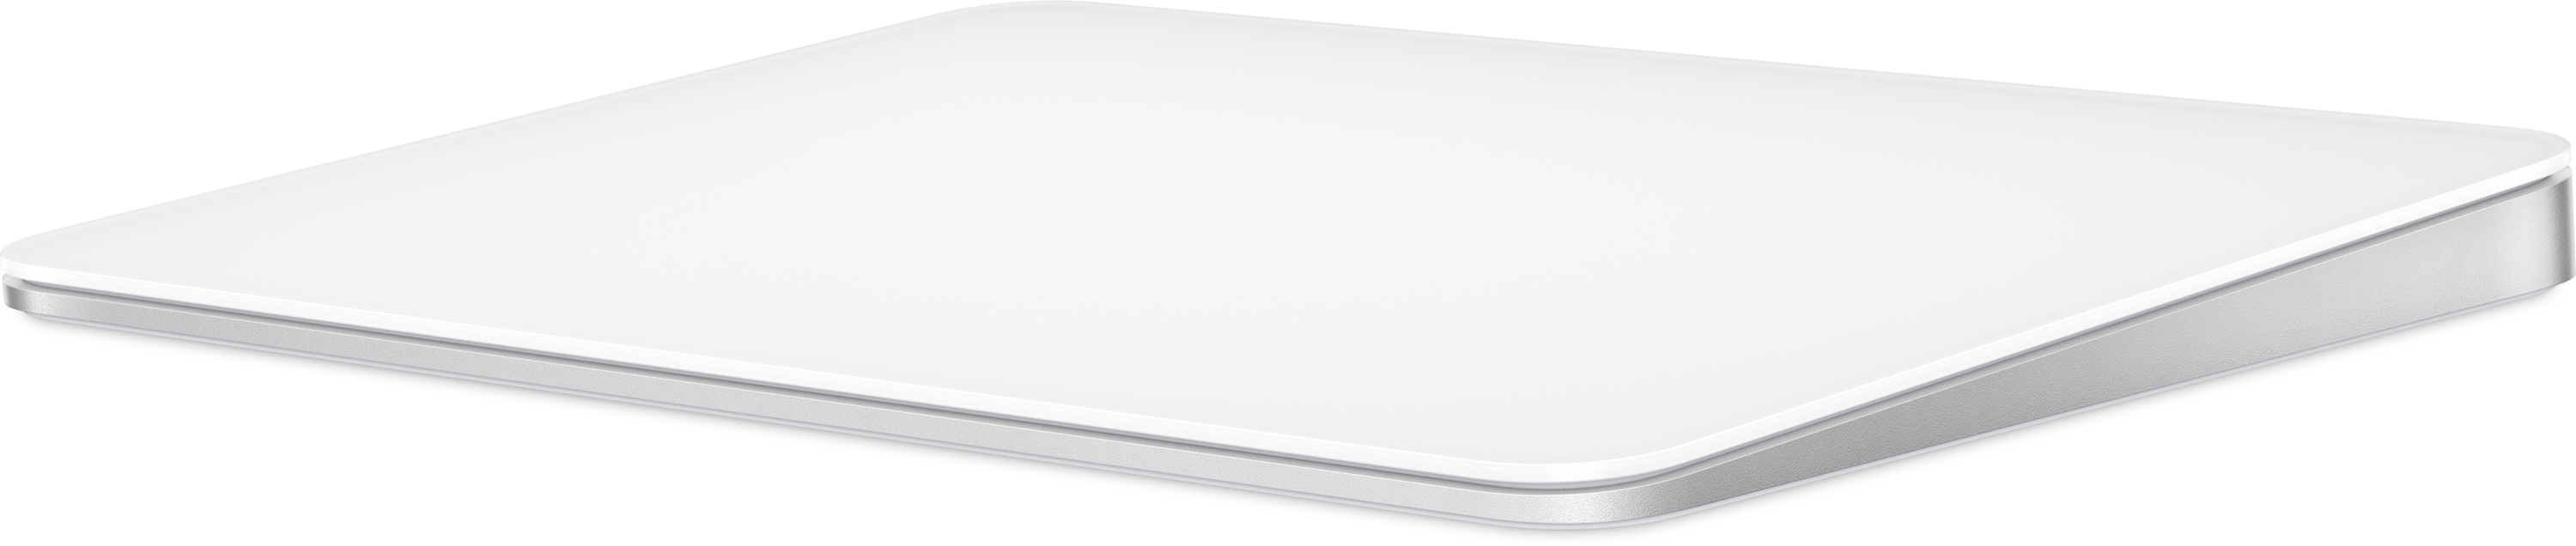 Apple Magic Trackpad with USB-C - Silver